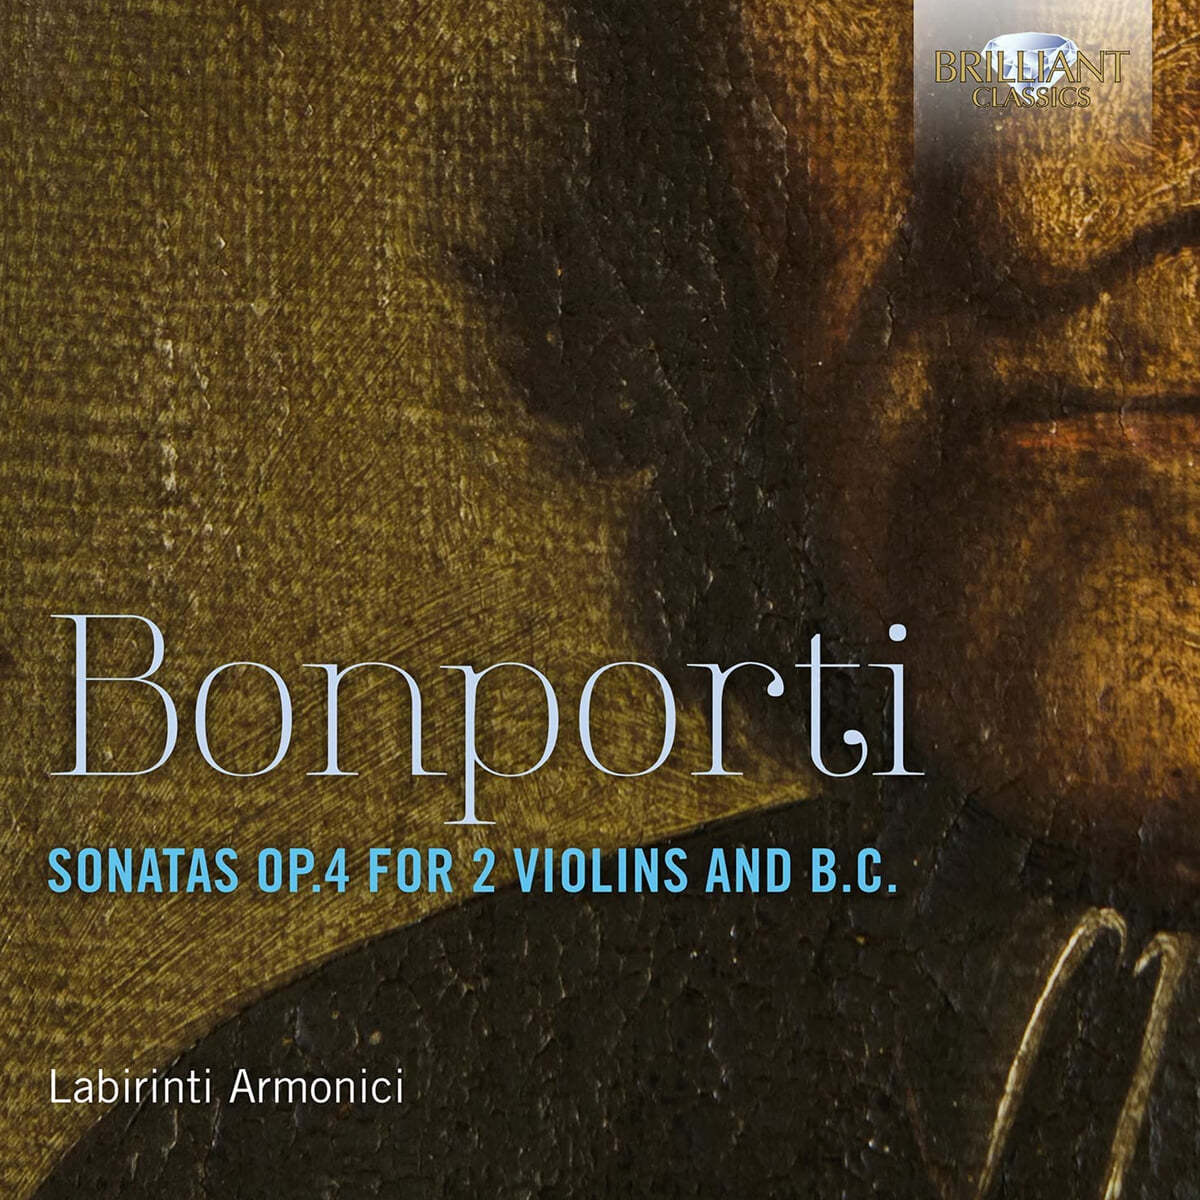 Labirinti Armonici 본포르티: 두 대의 바이올린과 콘티누오를 위한 소나타 (Bonporti: Sonatas Op.4 for 2 Violins and B.C.)